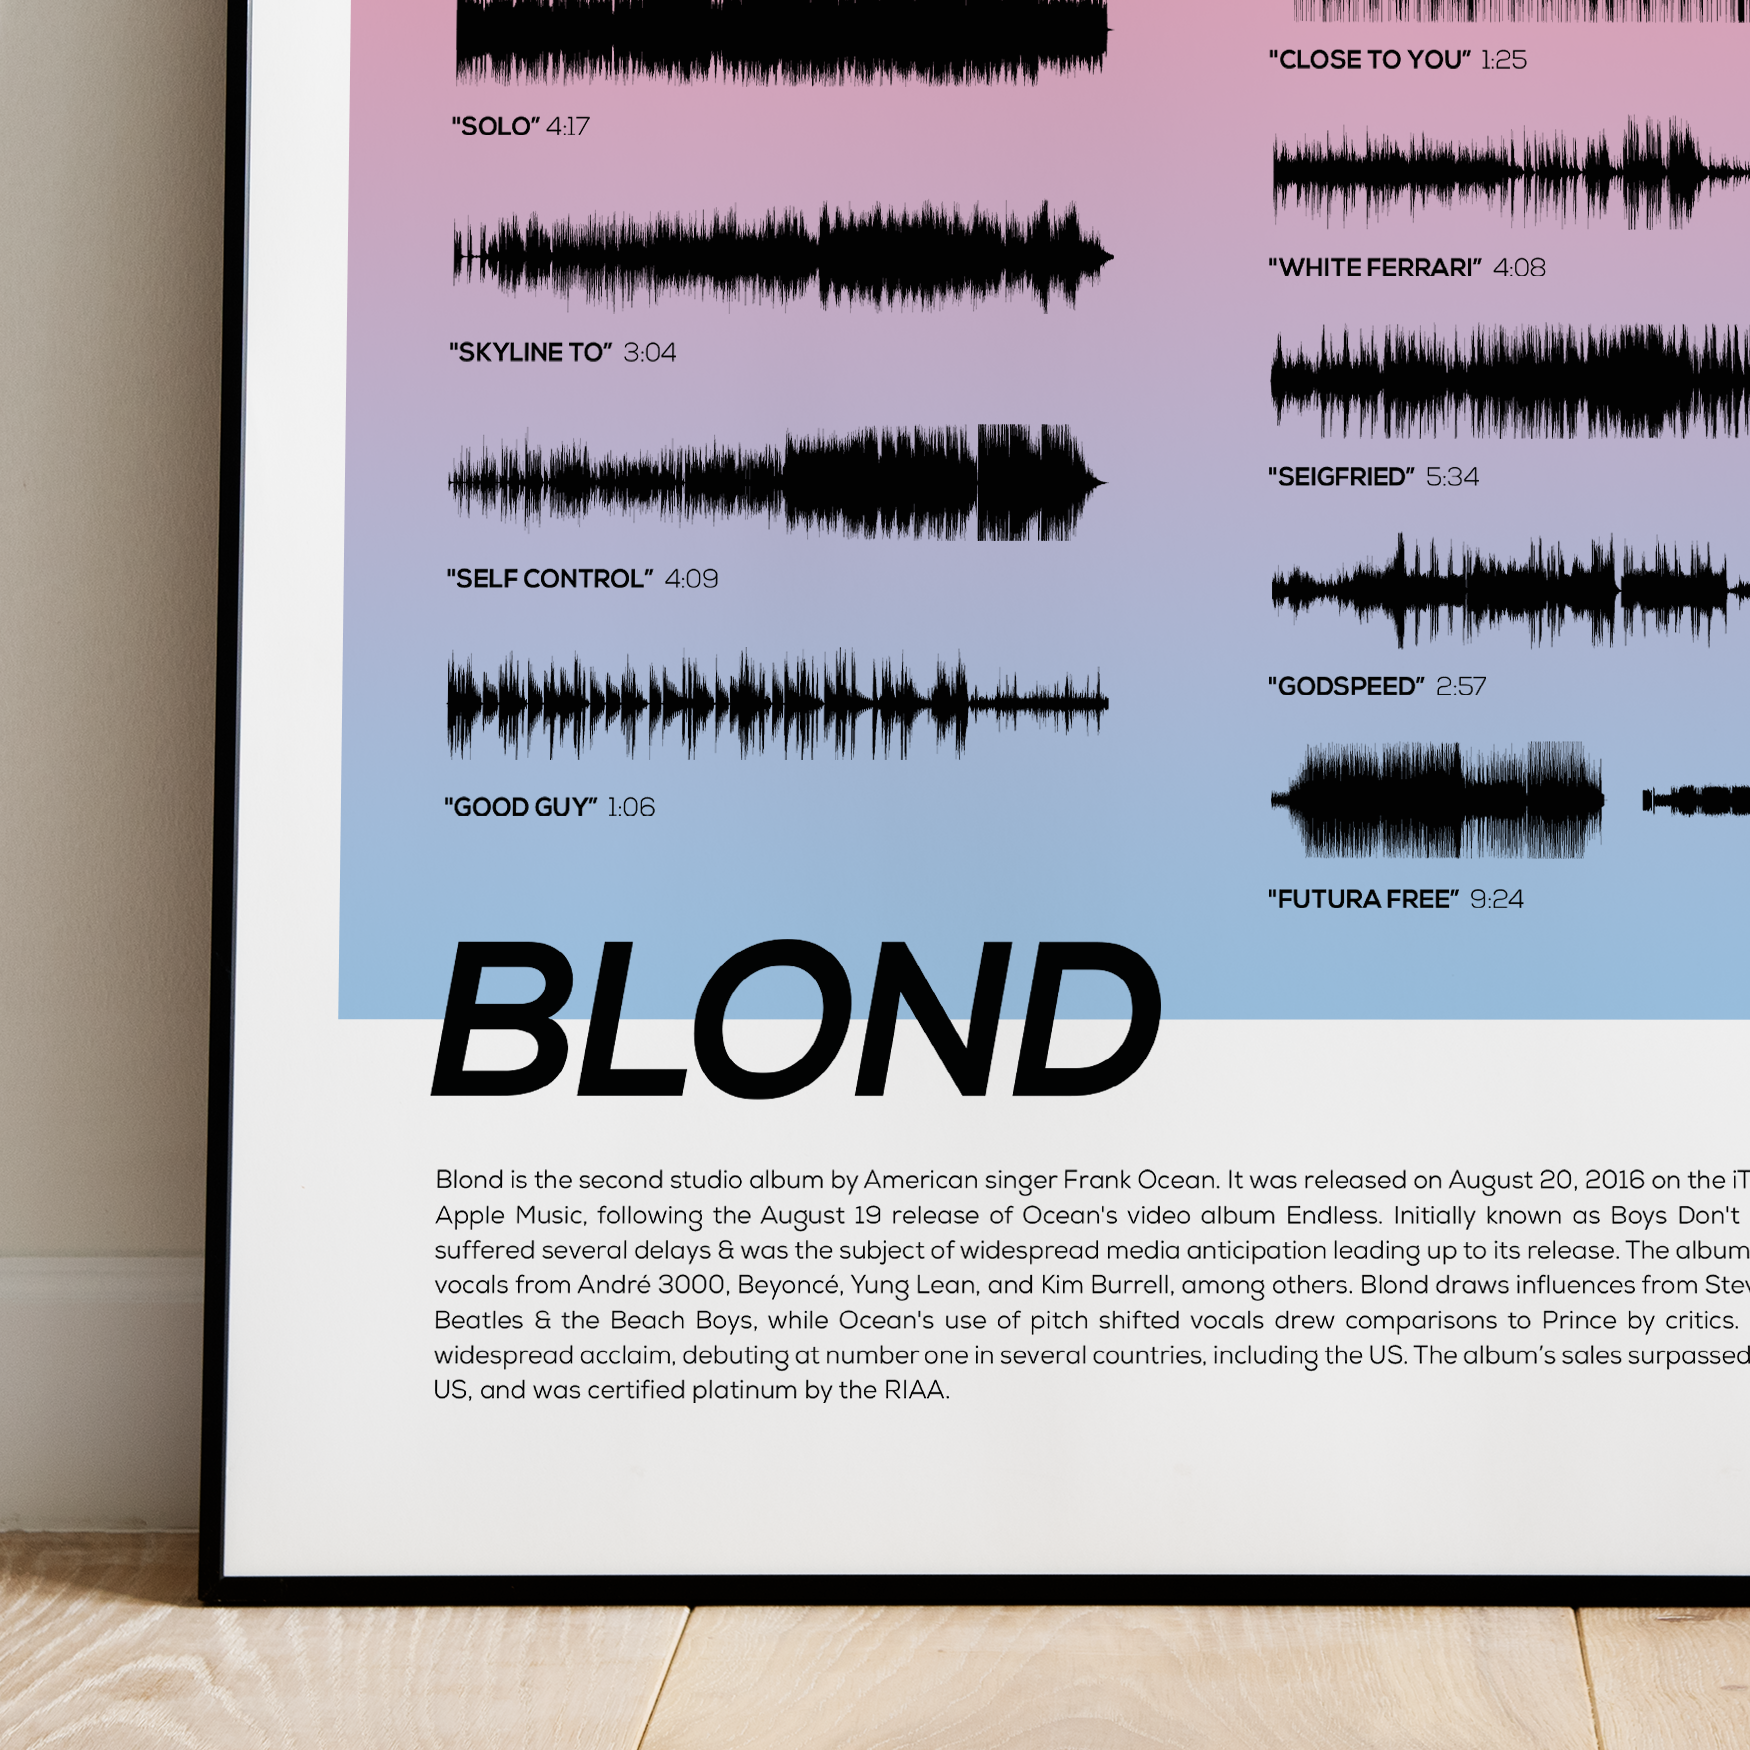 Blond" Blonde by Frank Ocean   Soundwave Art Poster – The Wav Room